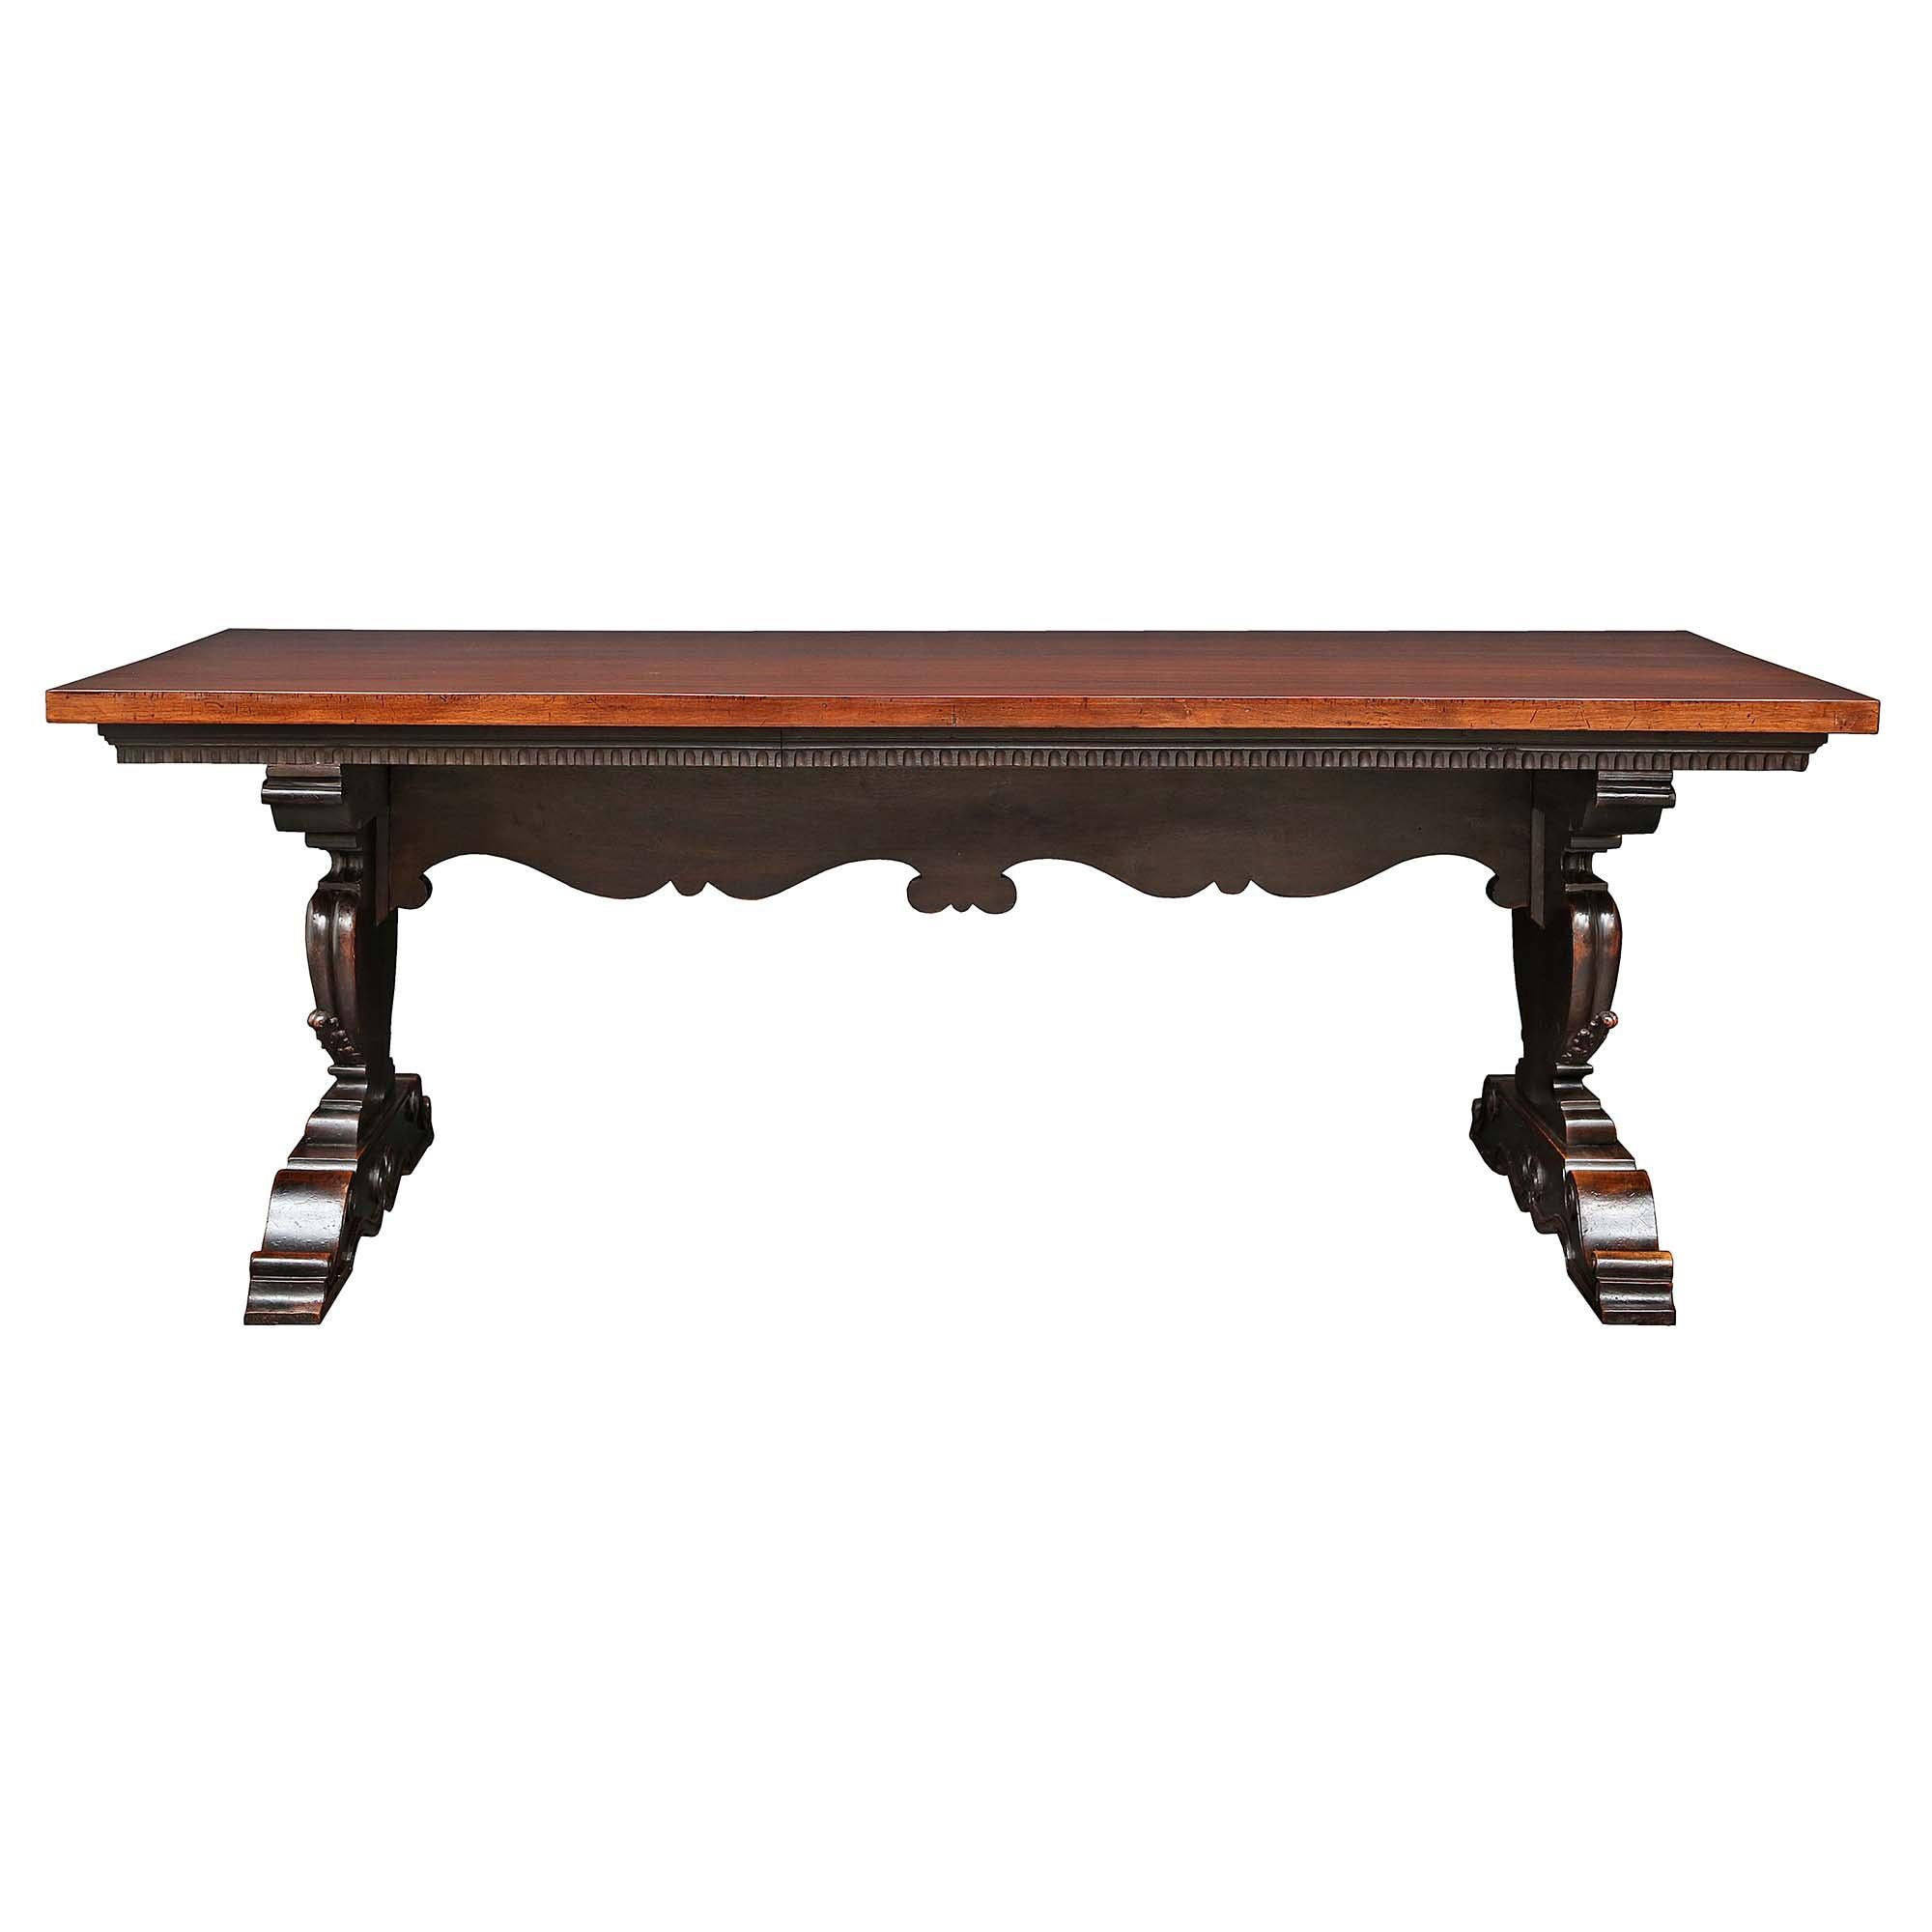 Italian Mid-19th Century Solid Walnut Trestle Table